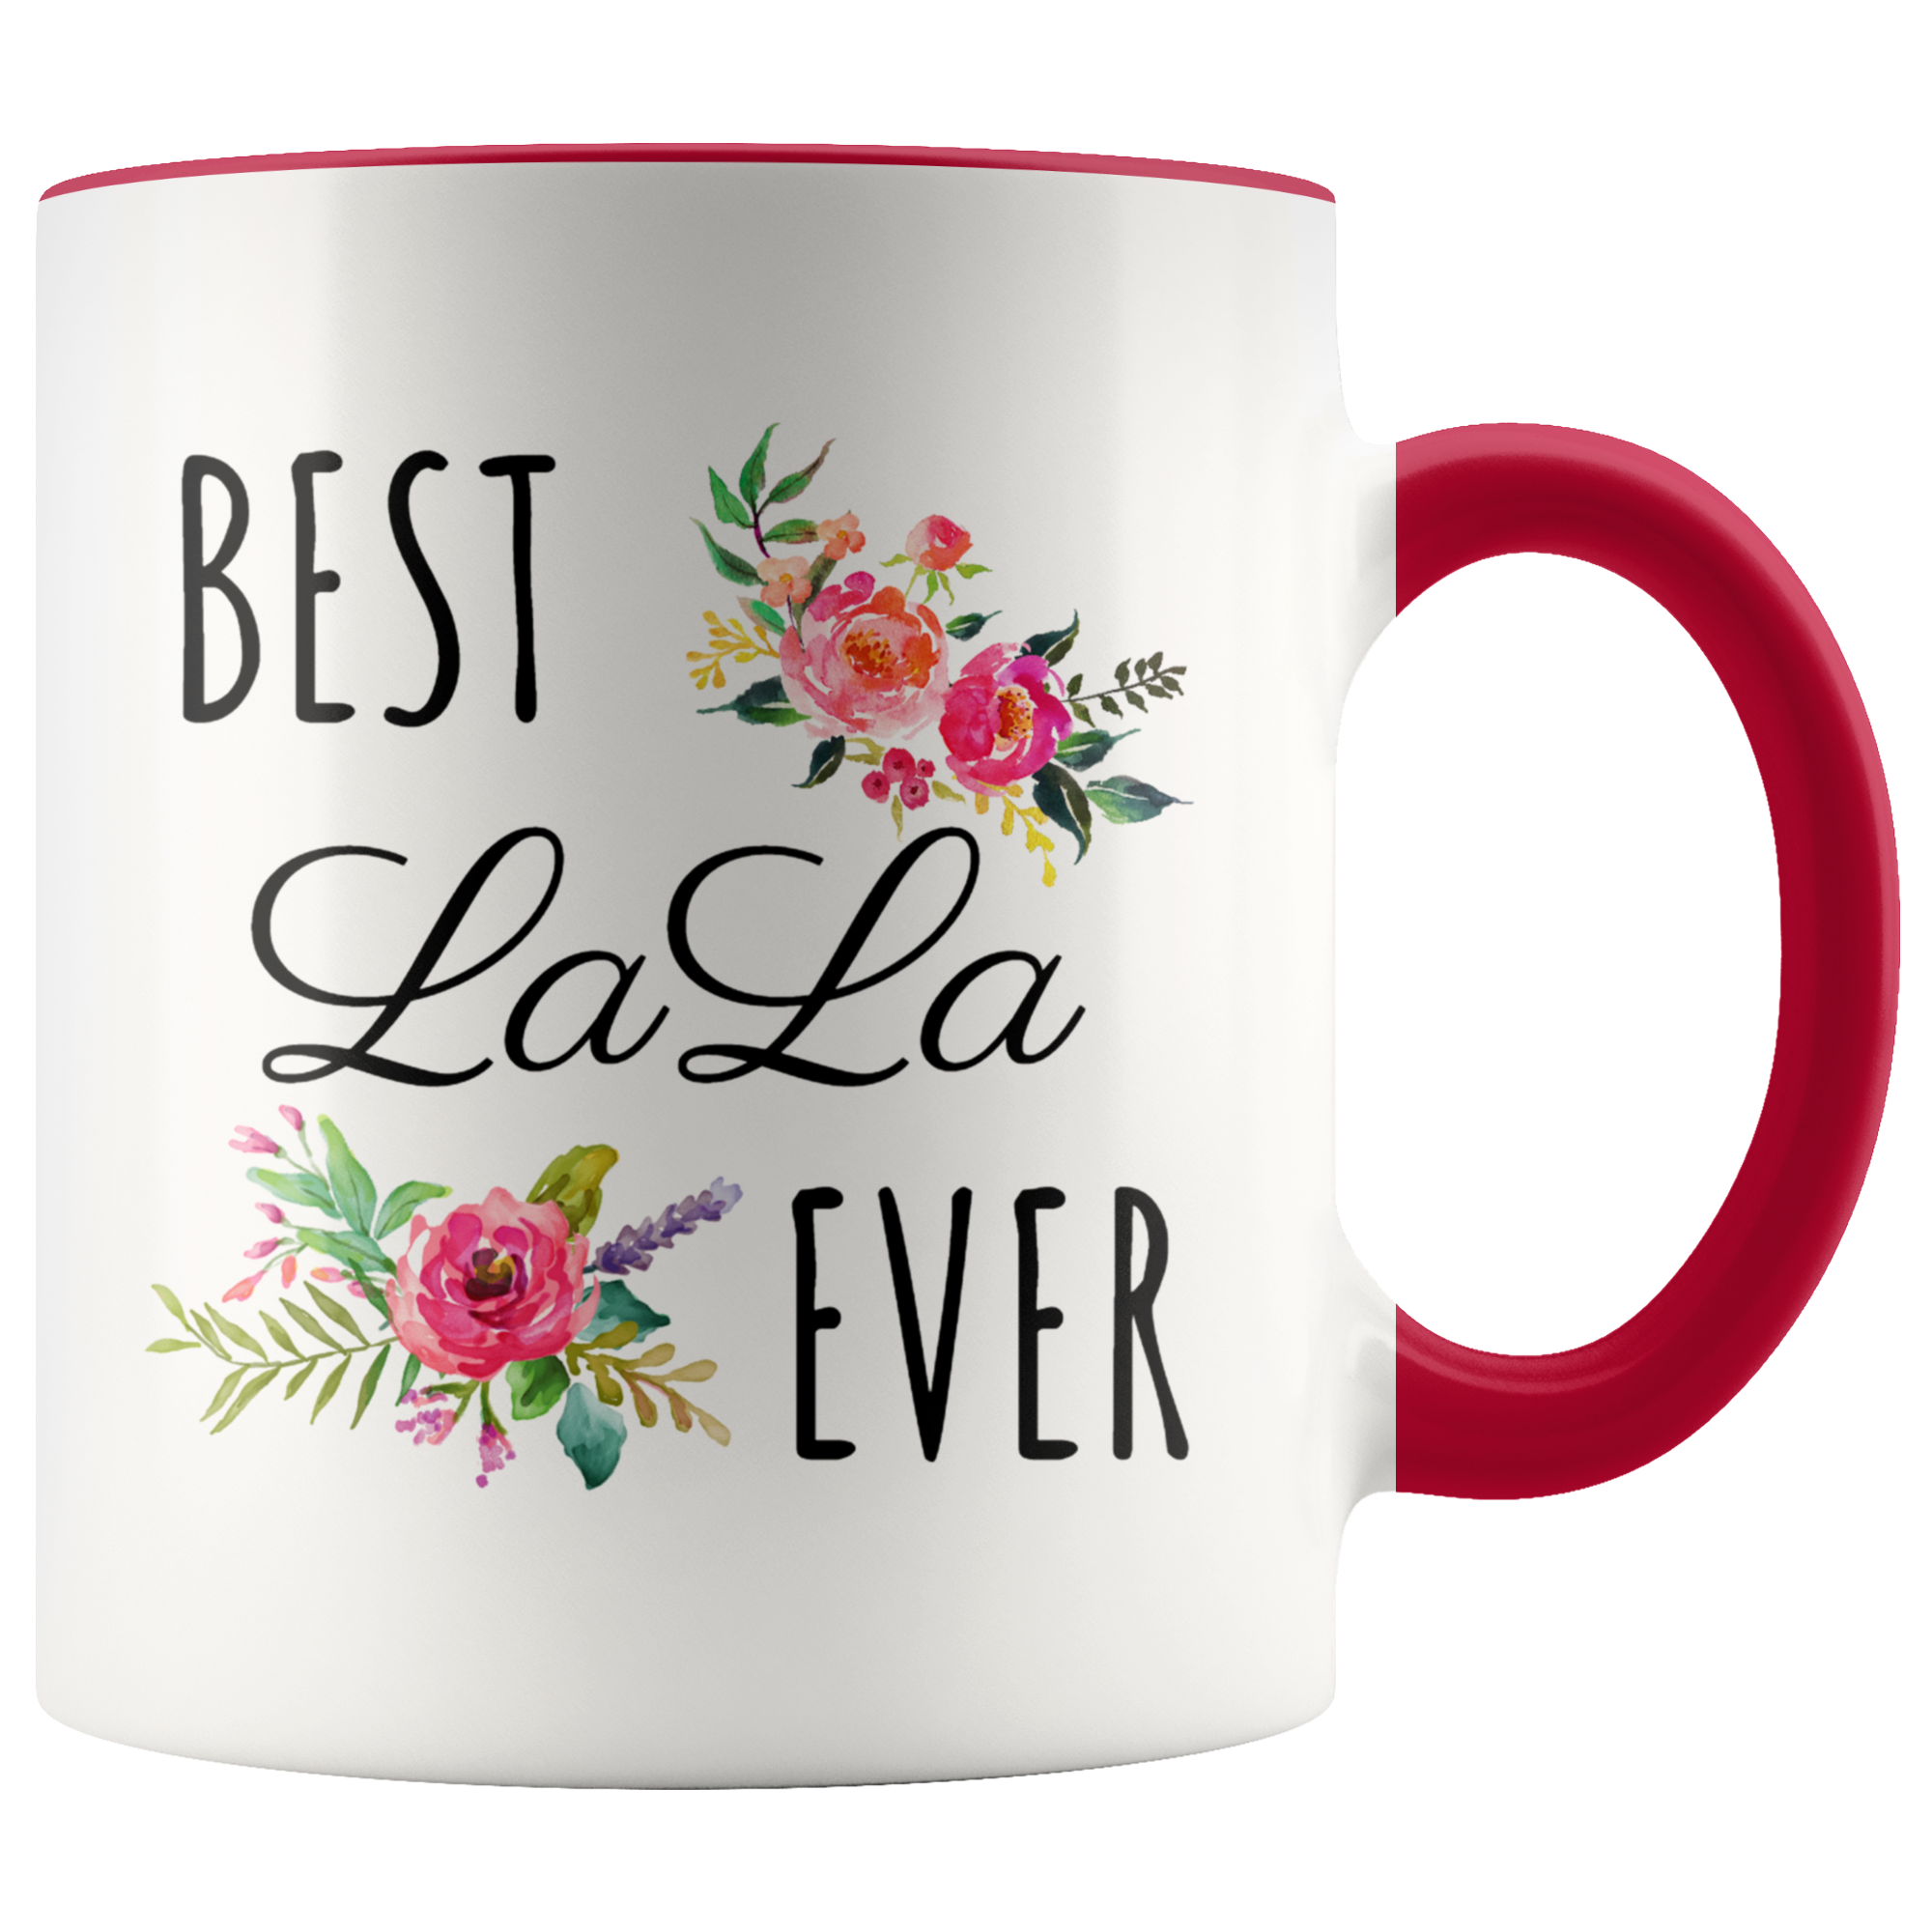 Best LaLa Mug